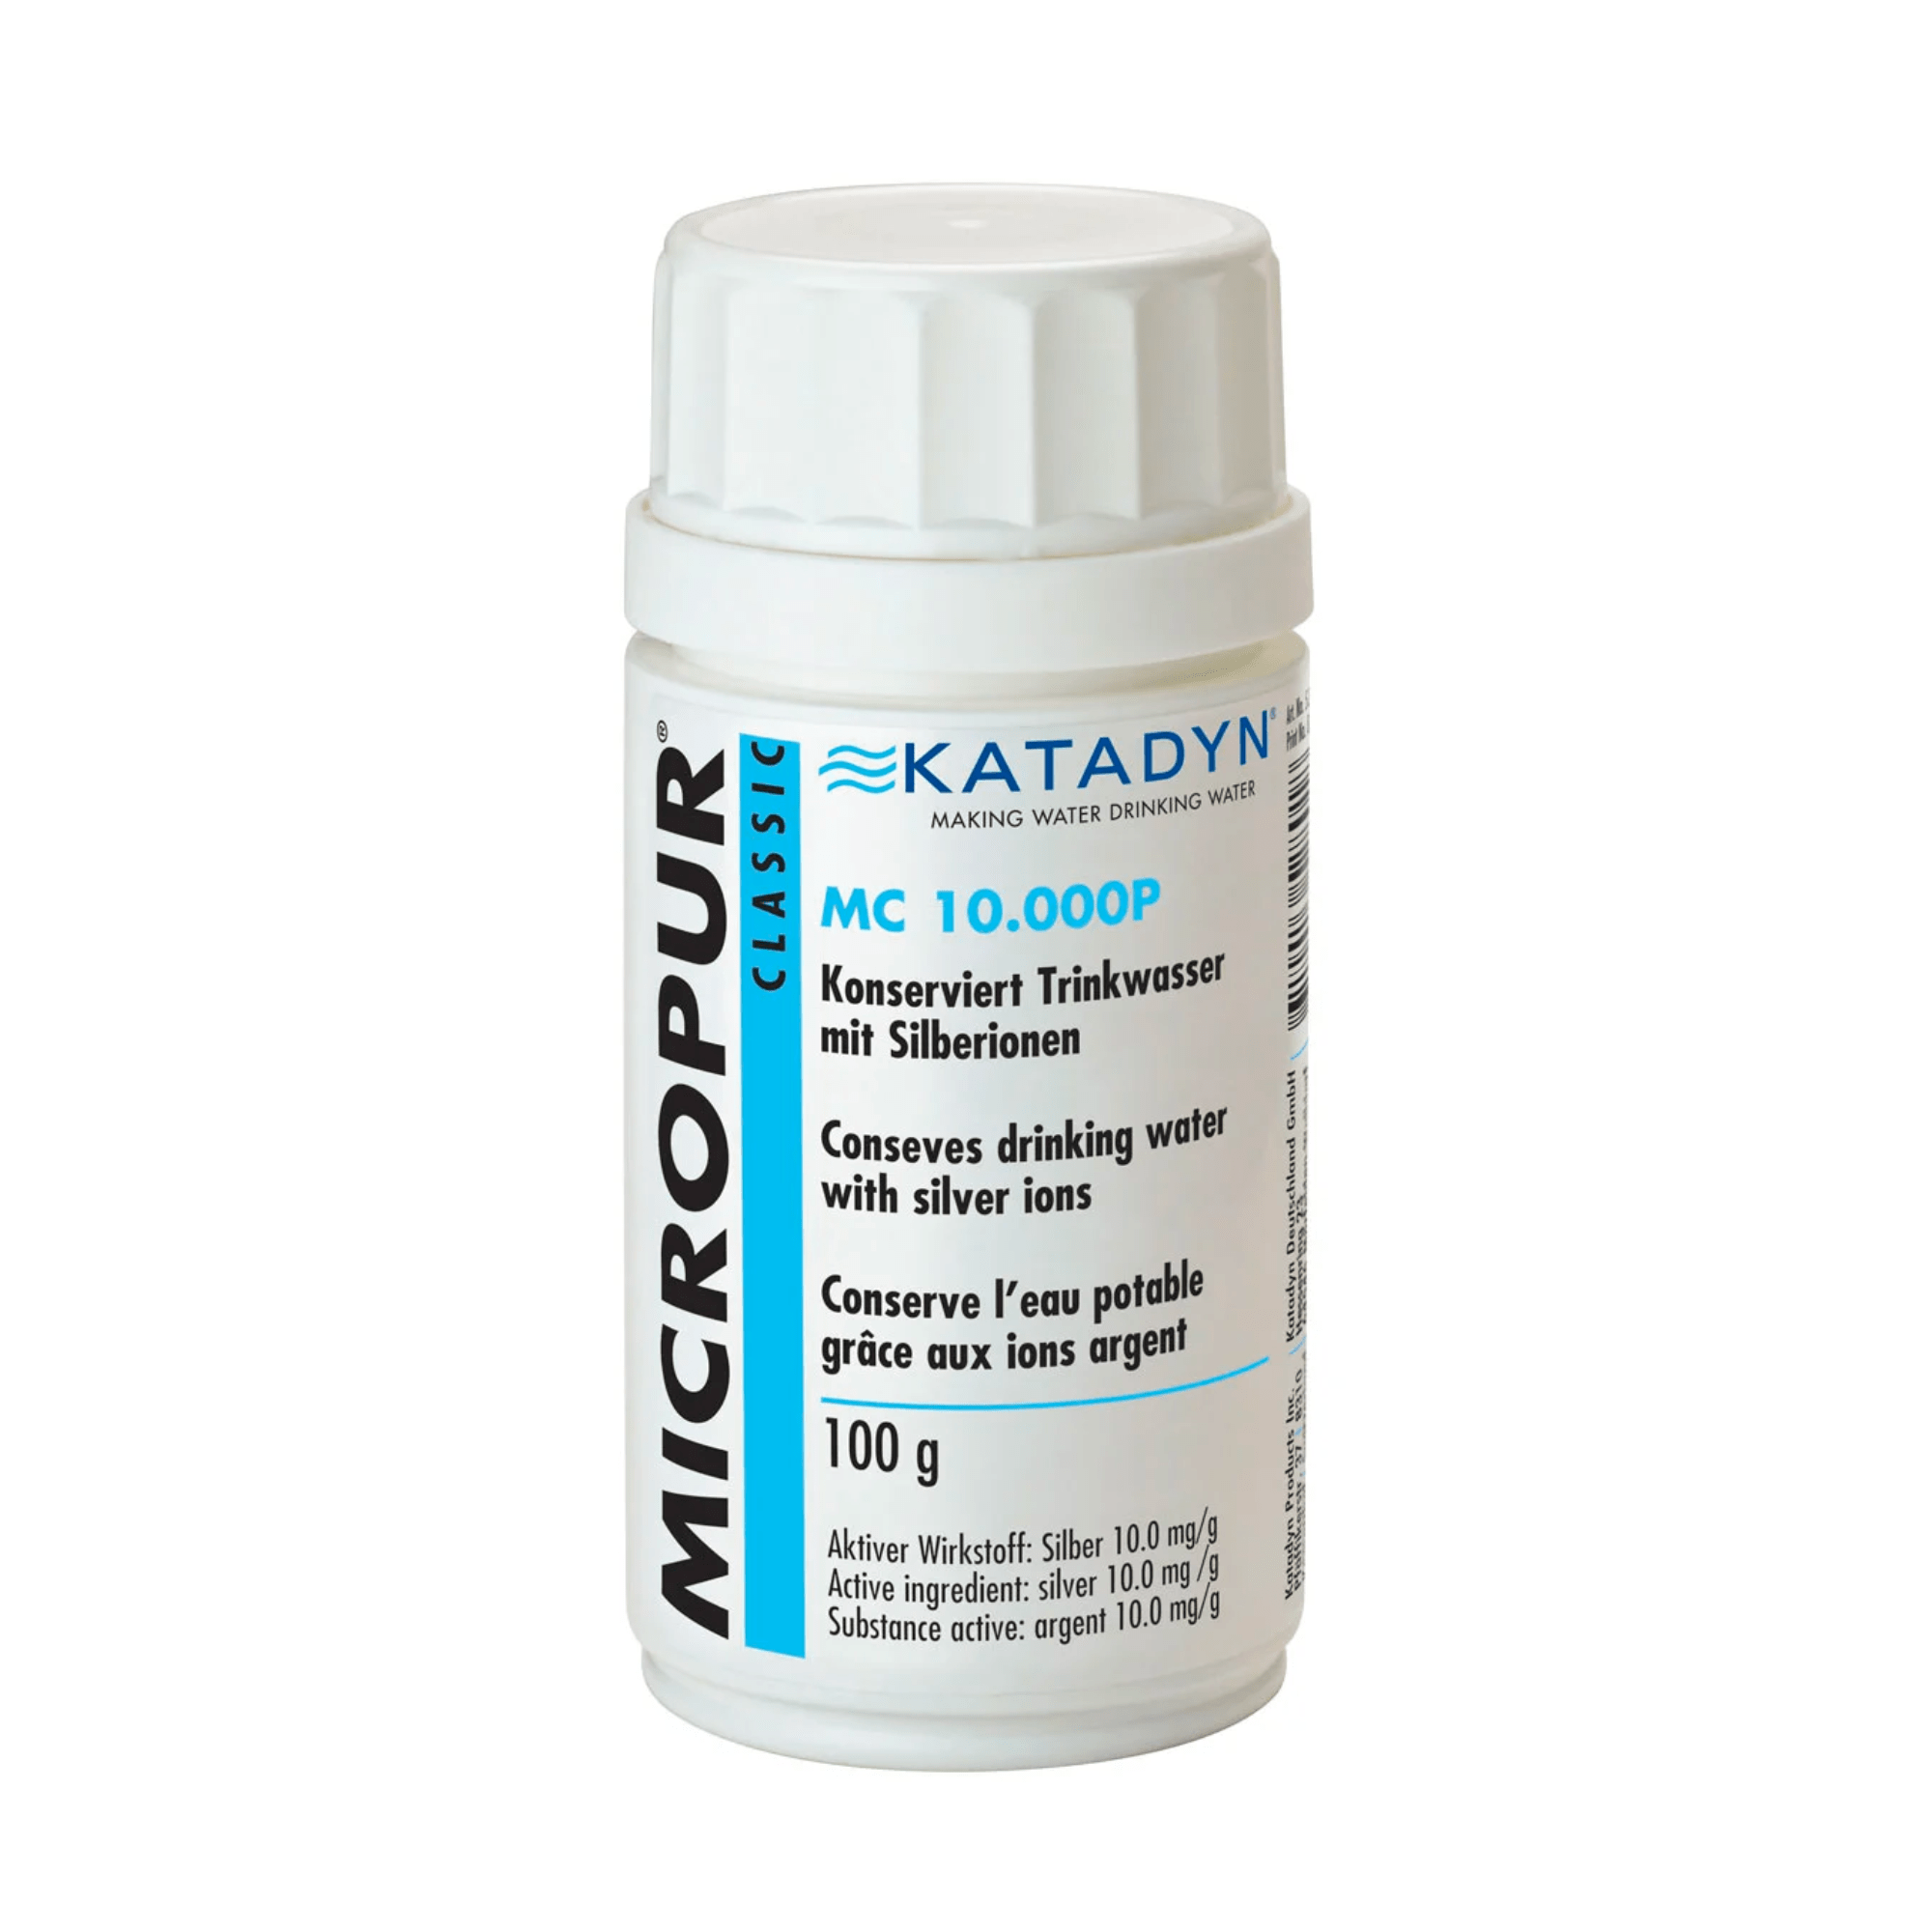 Katadyn Water Treatment 100g Micropur Classic Water Purification Powder KAT10003